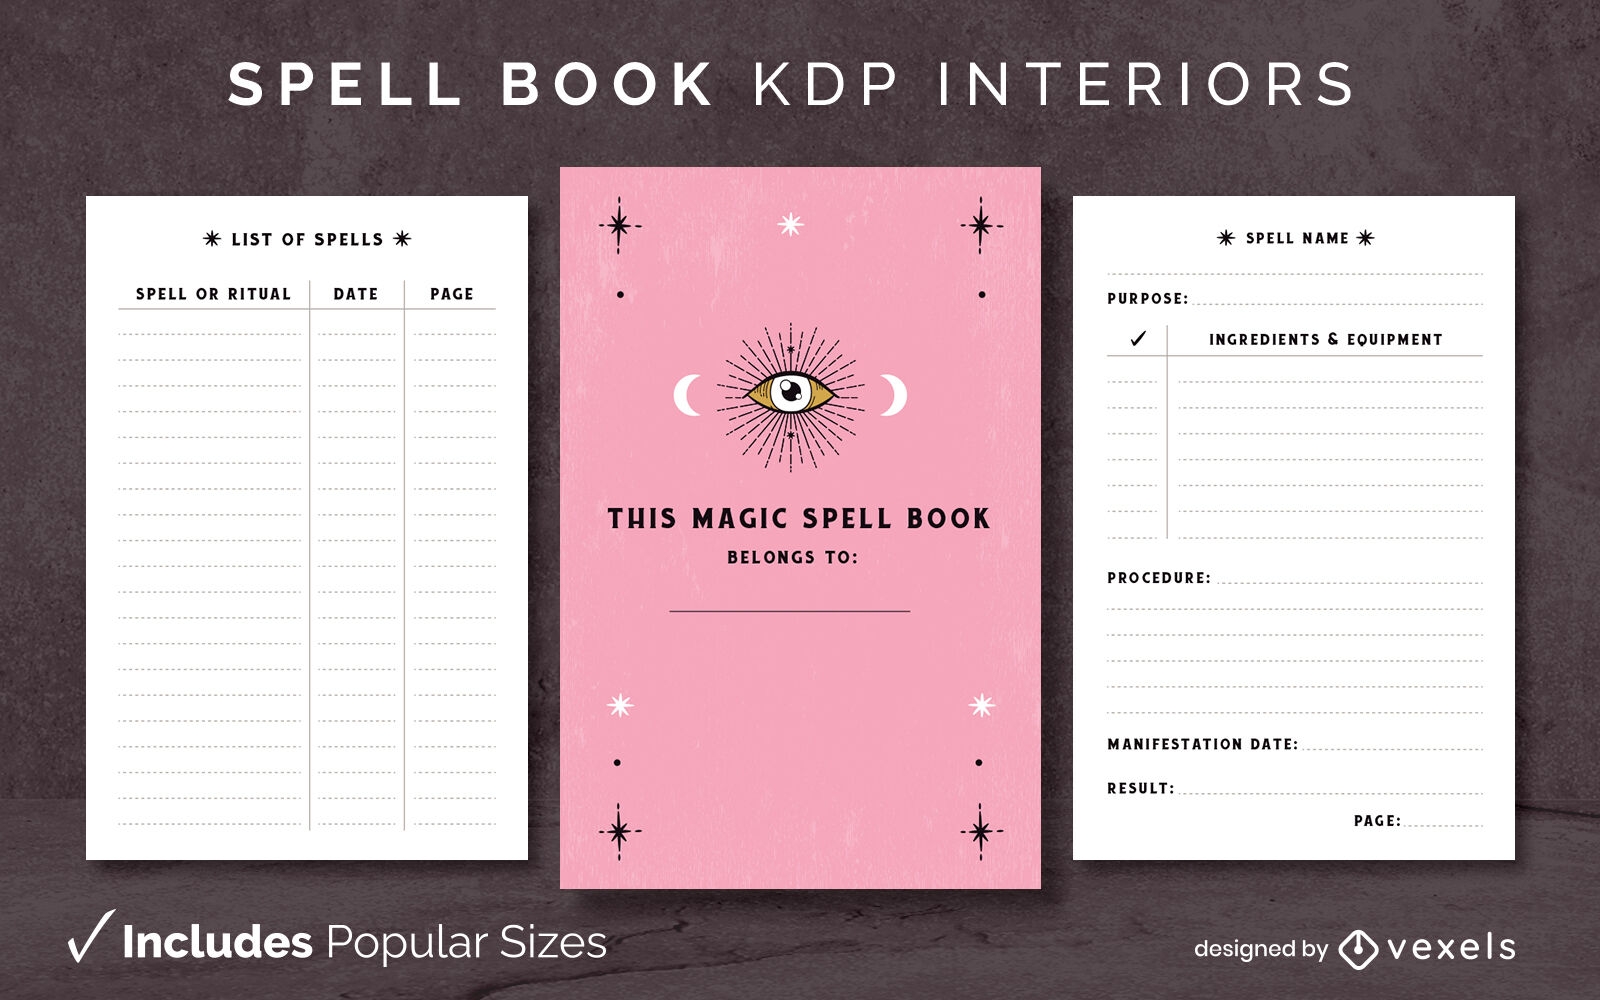 Magic spell book KDP interior template design